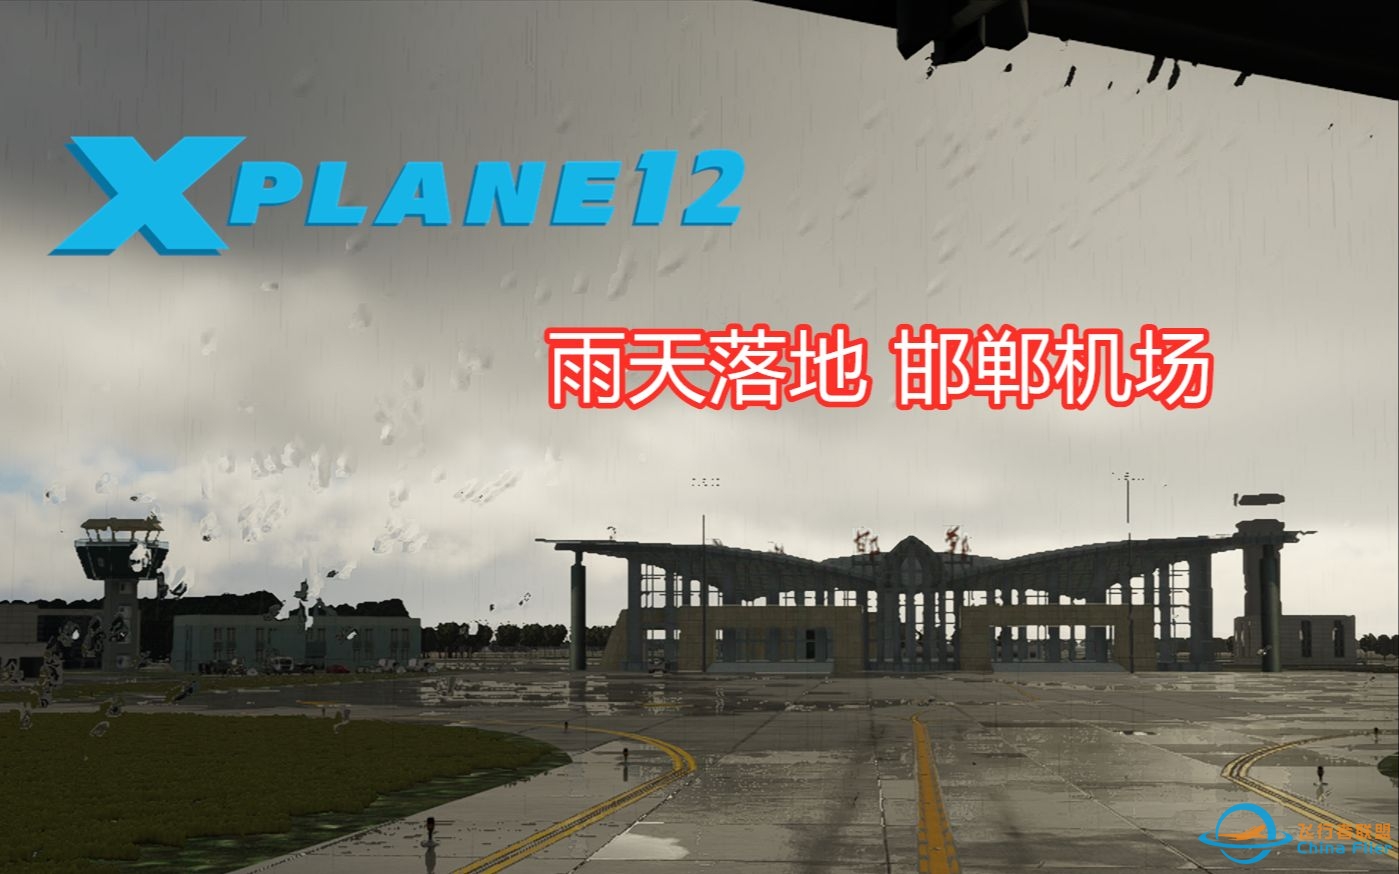 【Xplane 12】东方航空737-800 雨夜降落邯郸机场-6766 